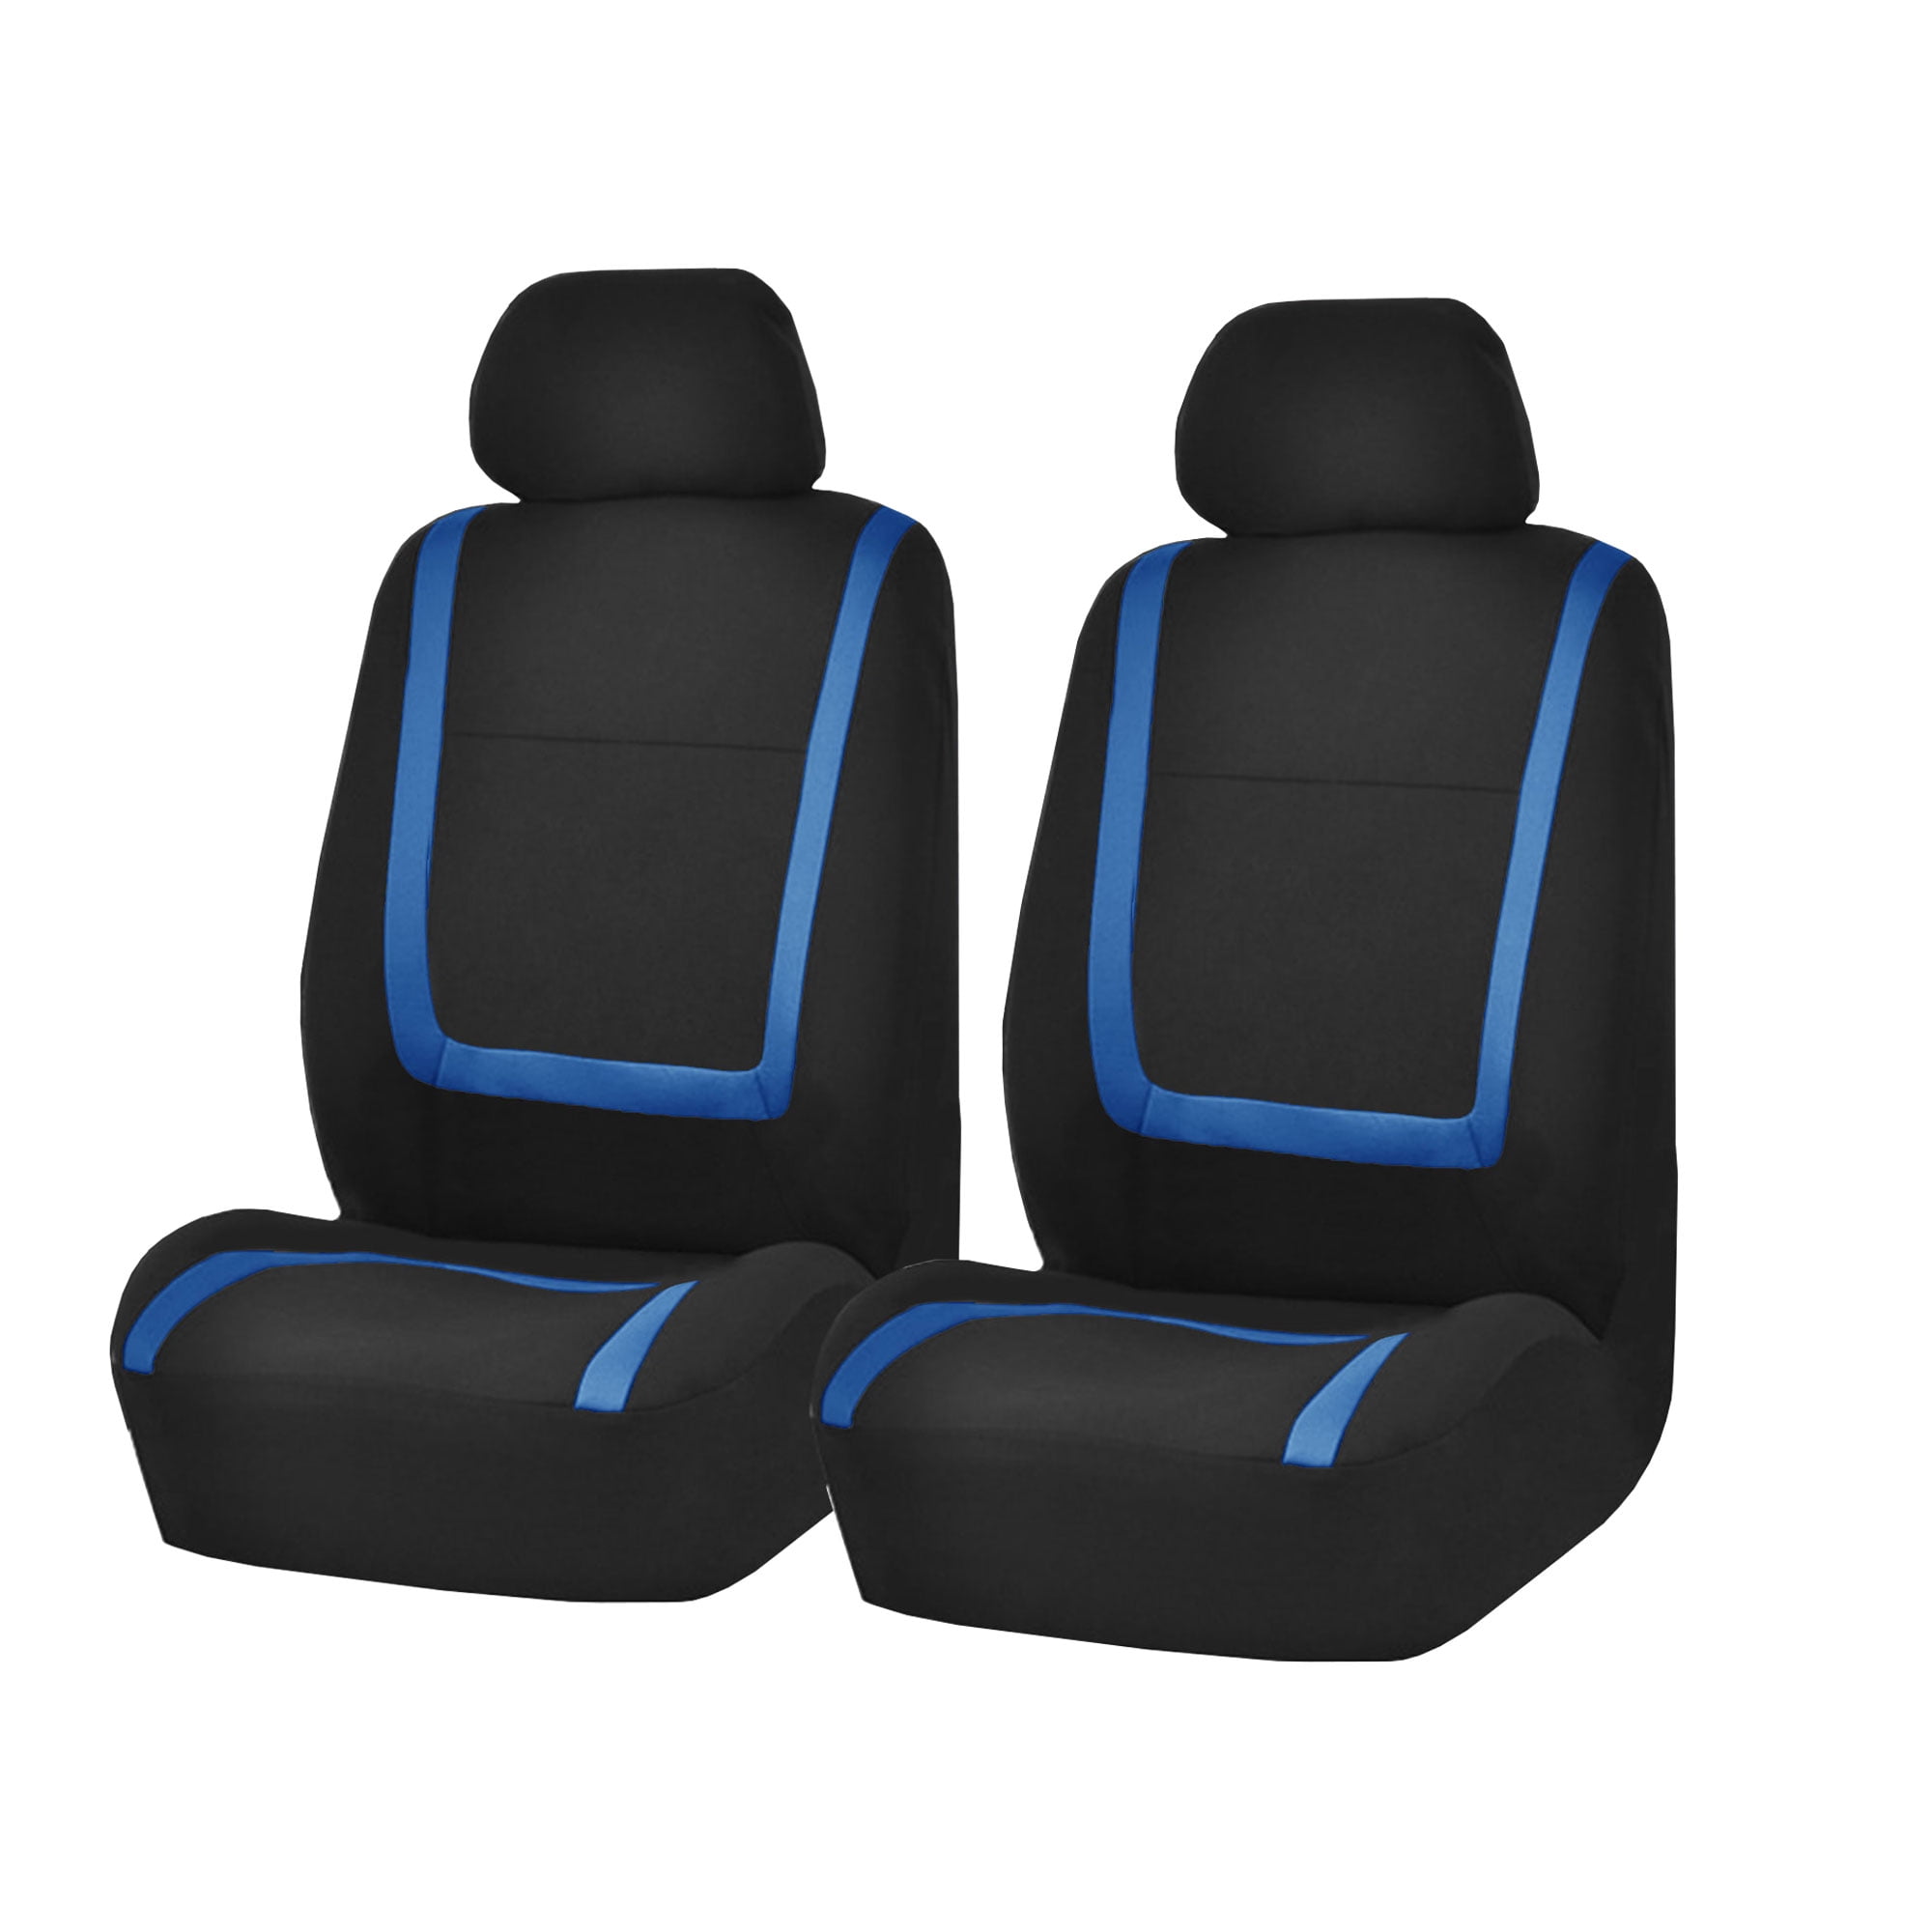 Set of 5 Pieces Blue Headrest Covers For Car Van Bus Headrest Covers Universal